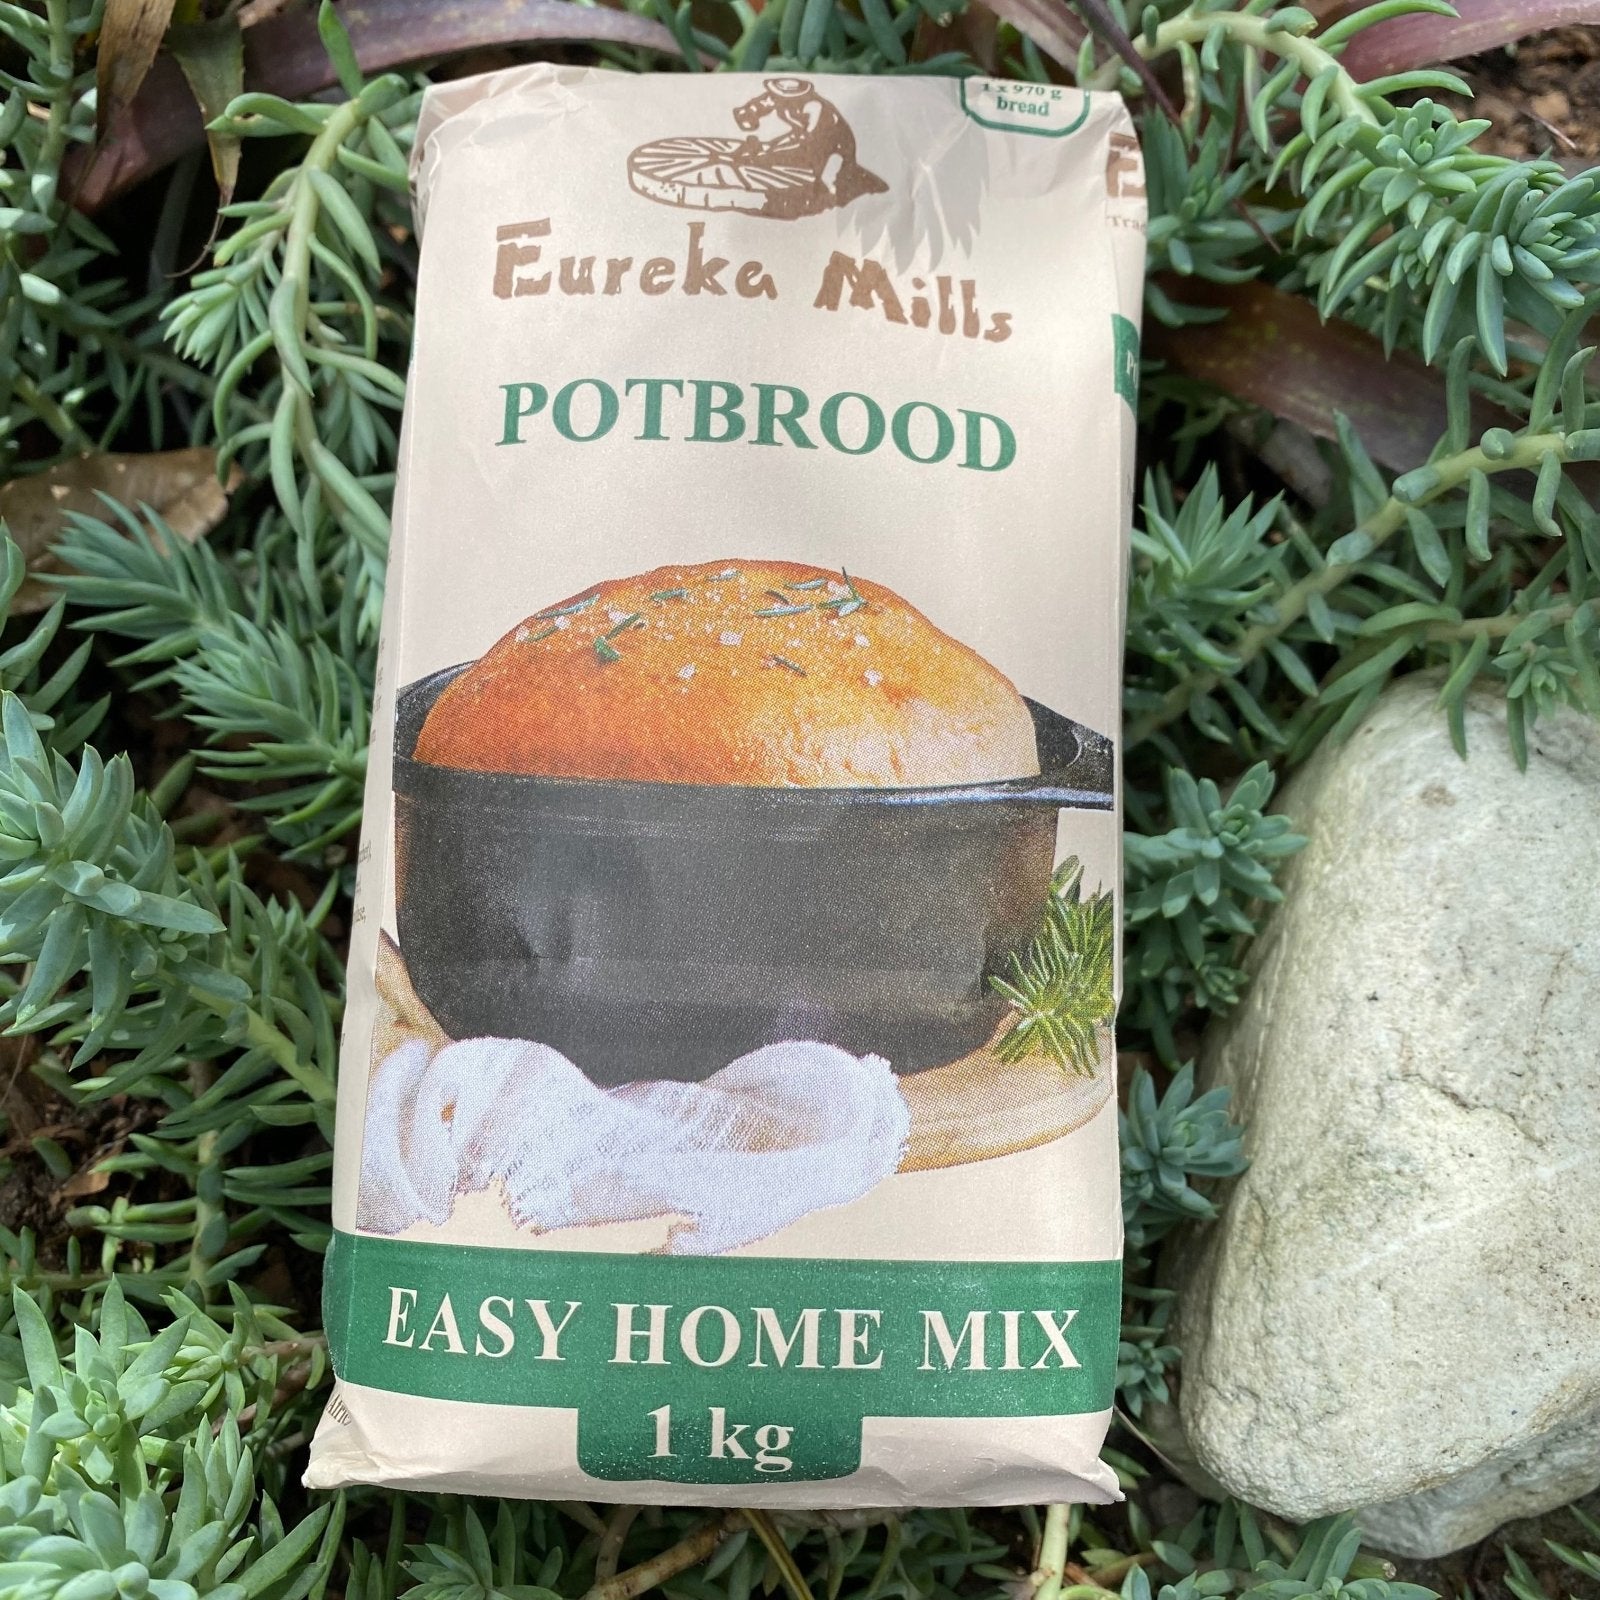 Eureka Mills Stone Ground Potbrood Easy Home Mix (1kg) - The Deli